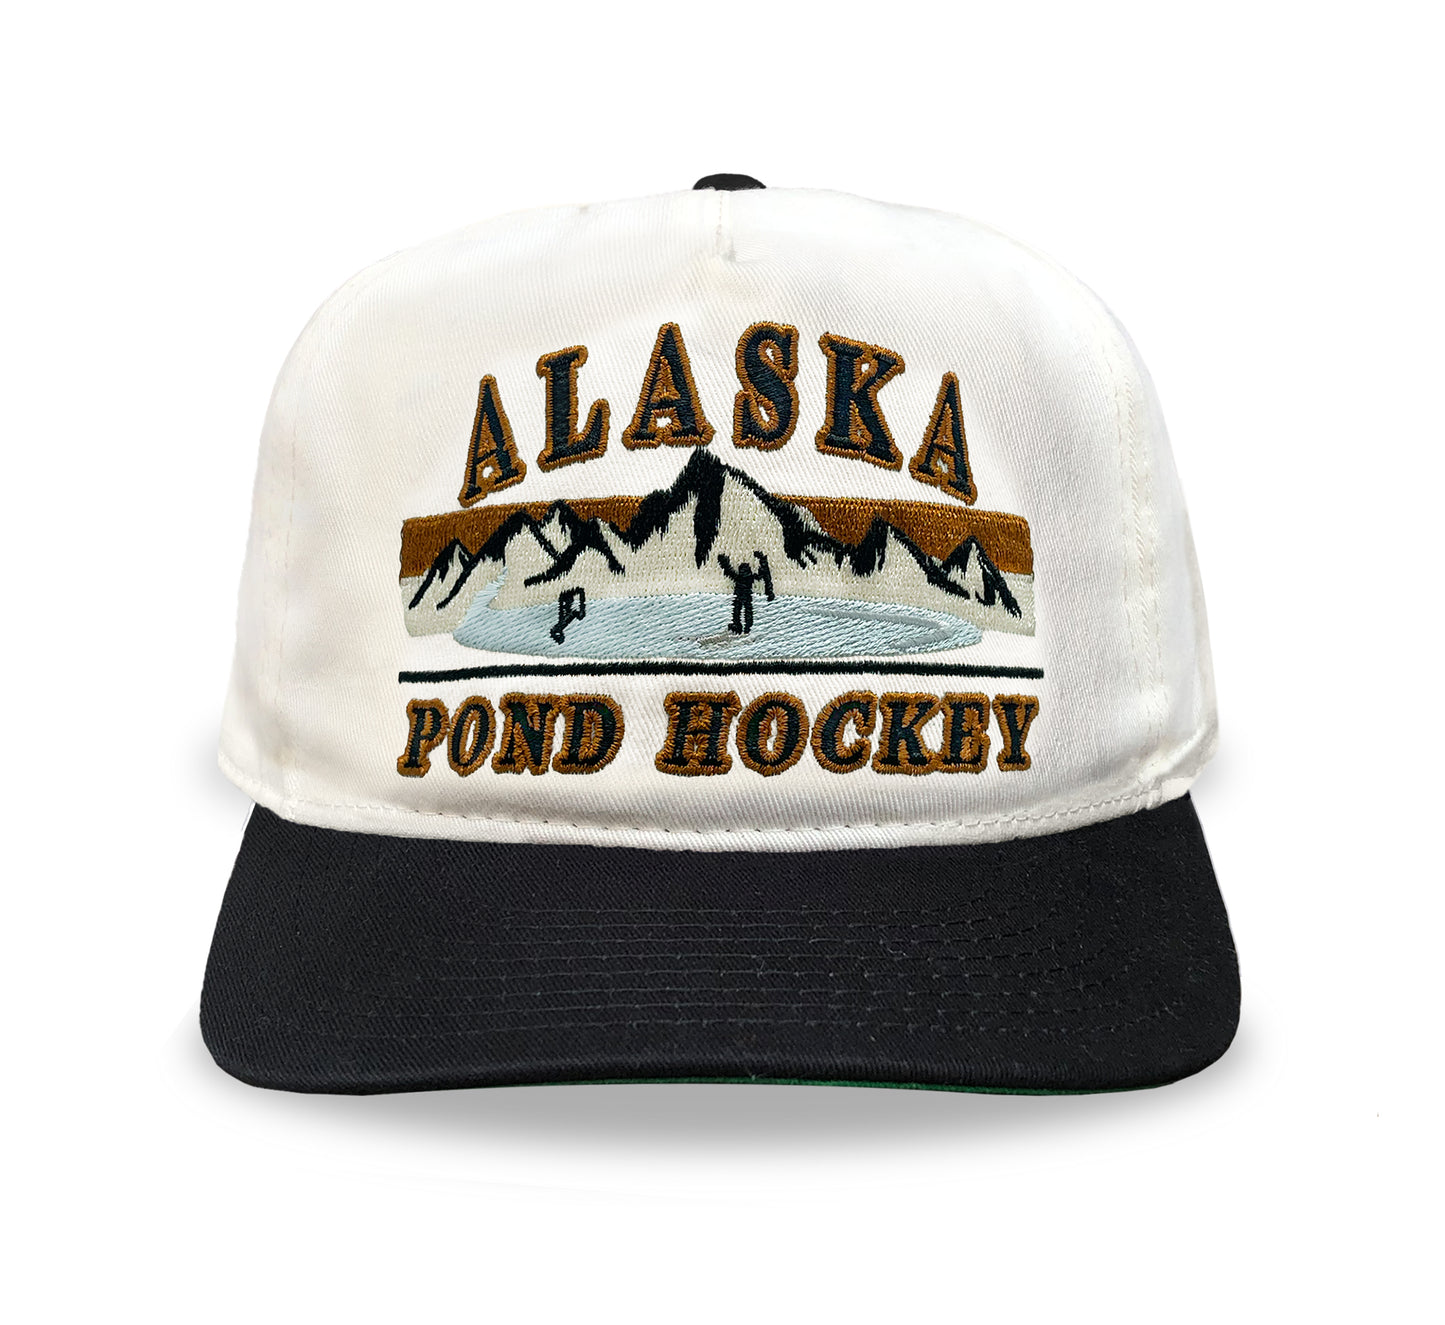 Alaska Pond Hockey Snapback: Cream